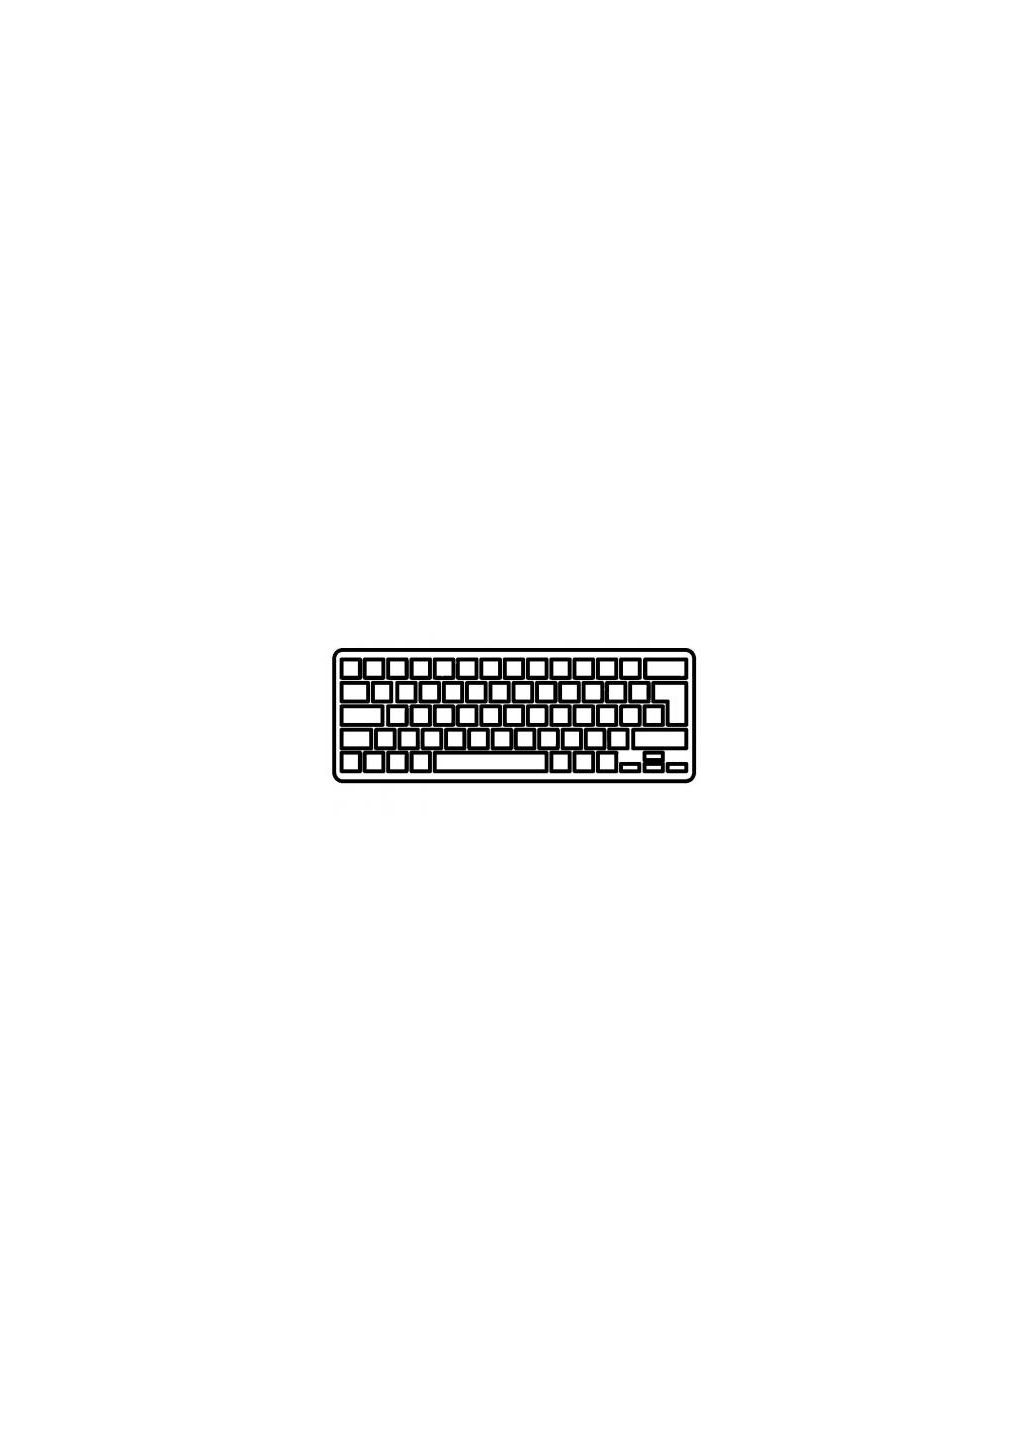 Клавиатура ноутбука EEE PC 700,701,900,901 белая RU/US (A46029) Asus eee pc 700, 701, 900, 901 белая ru/us (276707855)